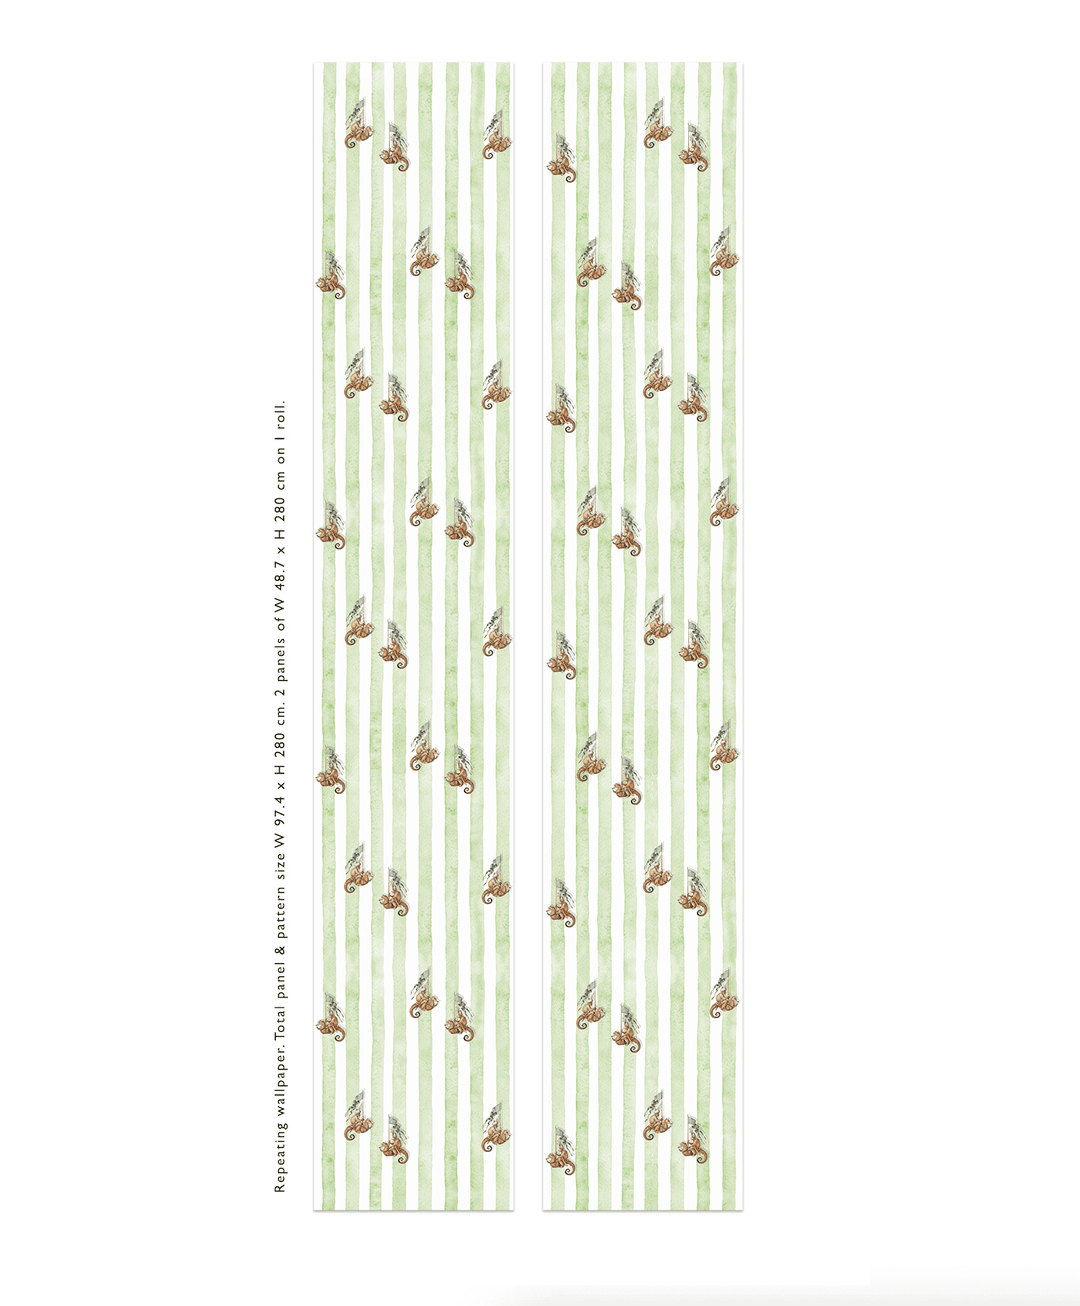 Seahorse Riders Green Repetitive Wallpaper